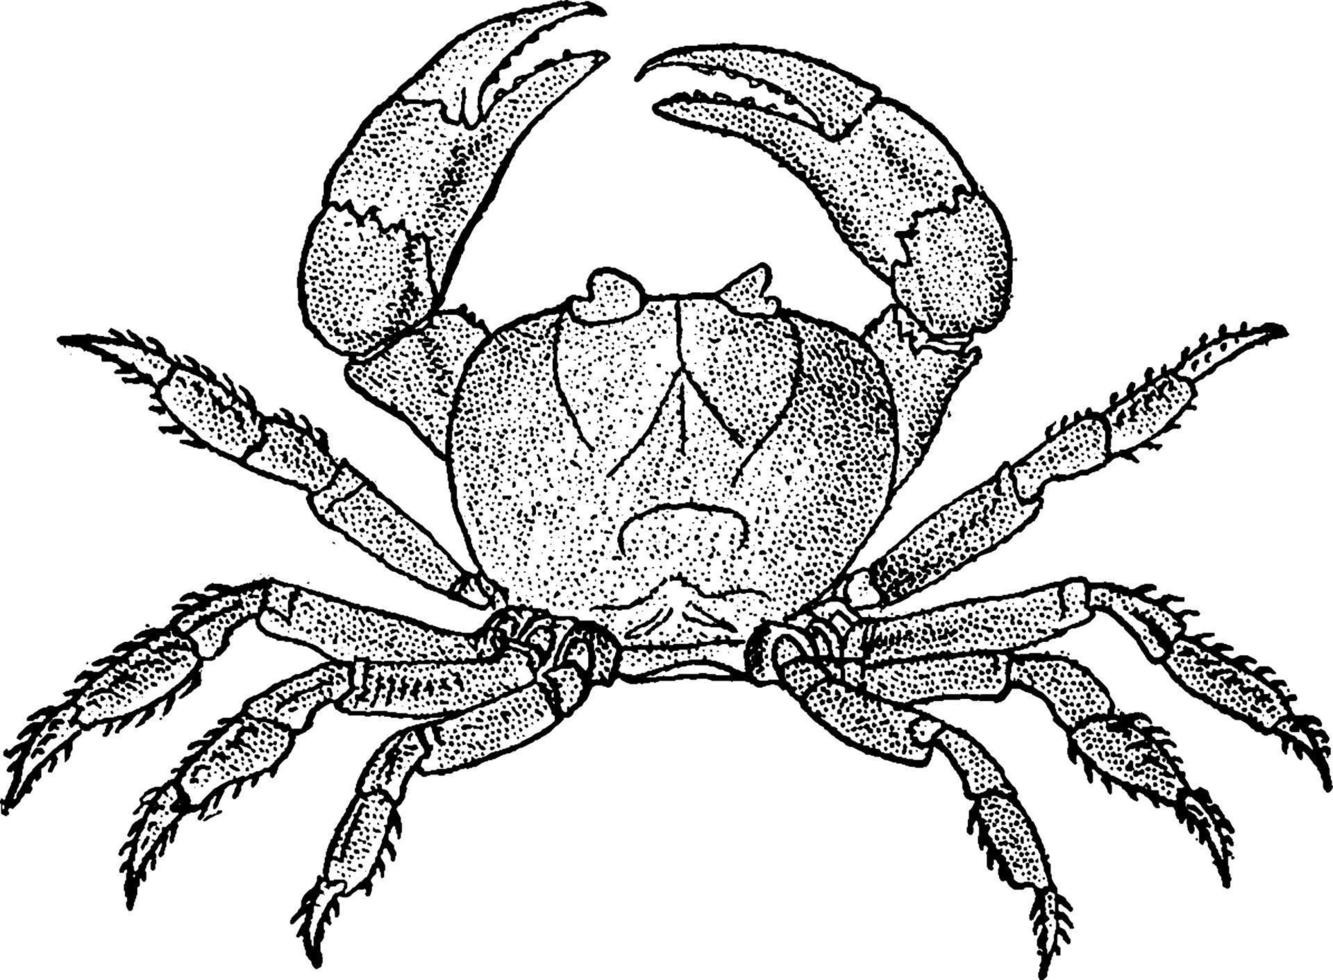 crabe terrestre, illustration vintage. vecteur